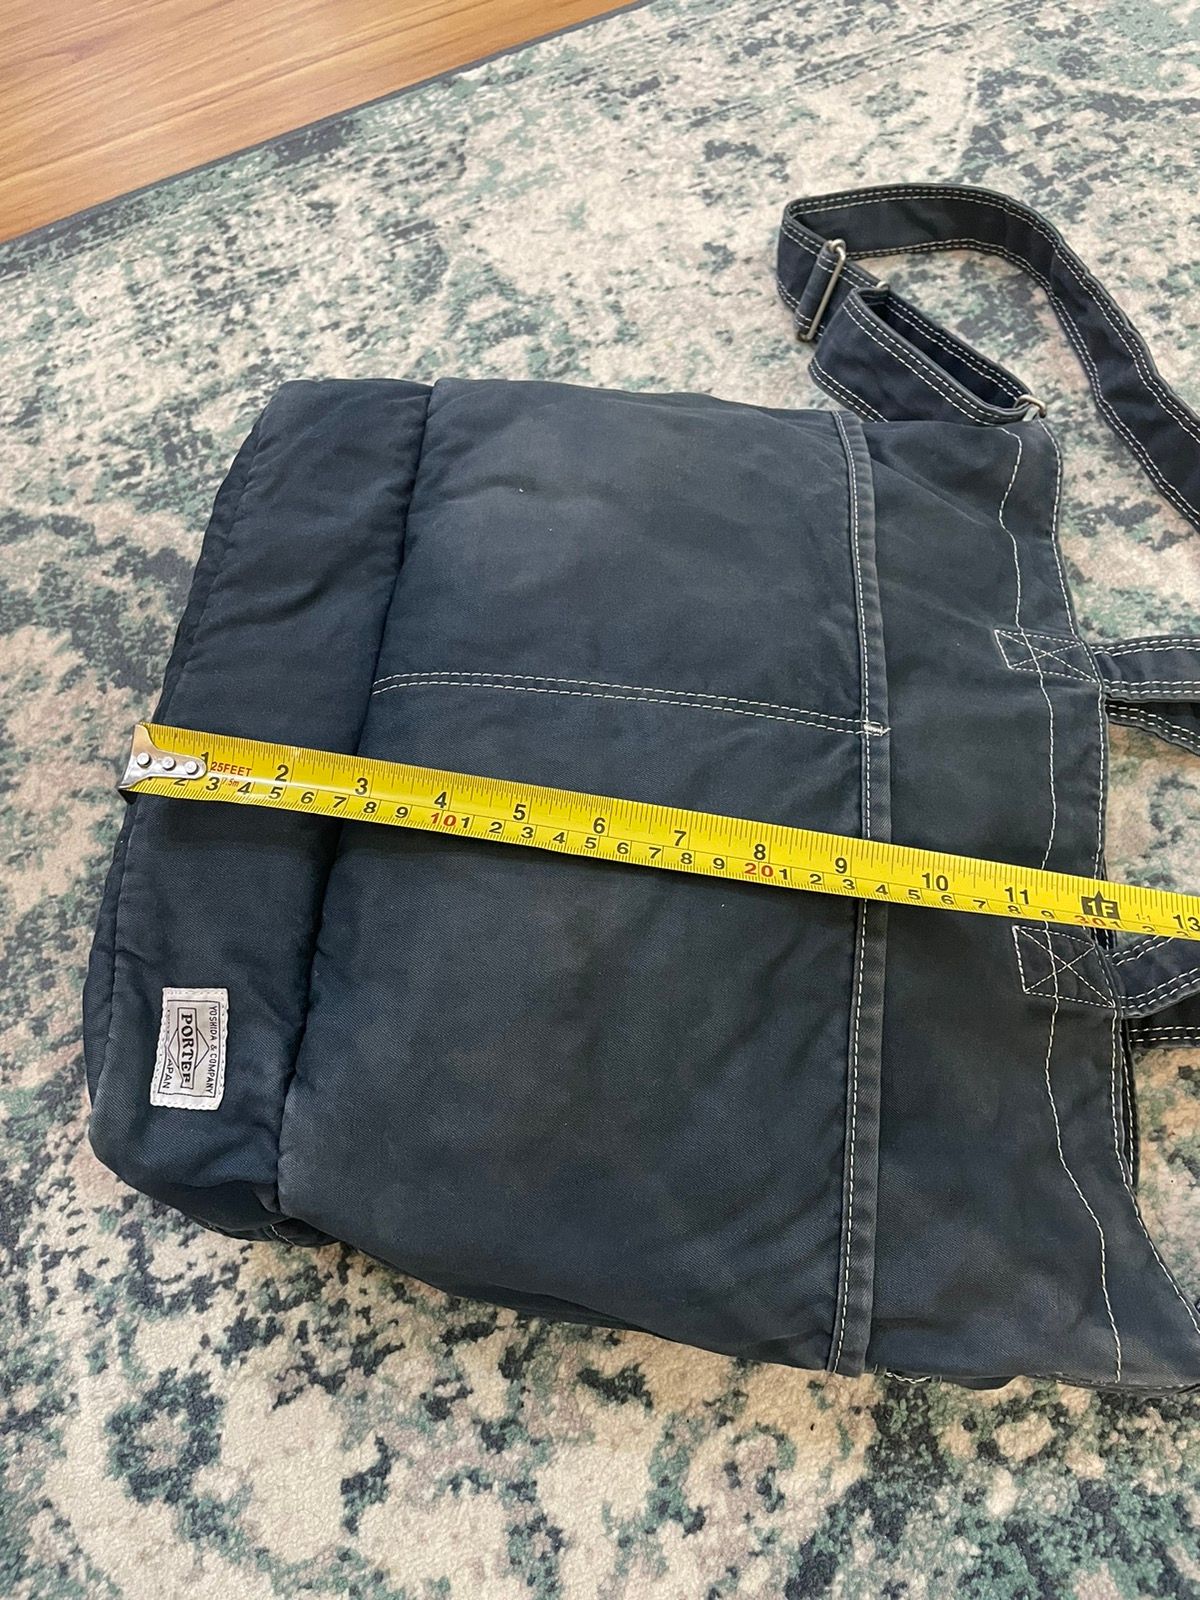 Yoshida Porter x Angstrom Technology Cargo Bag - 8